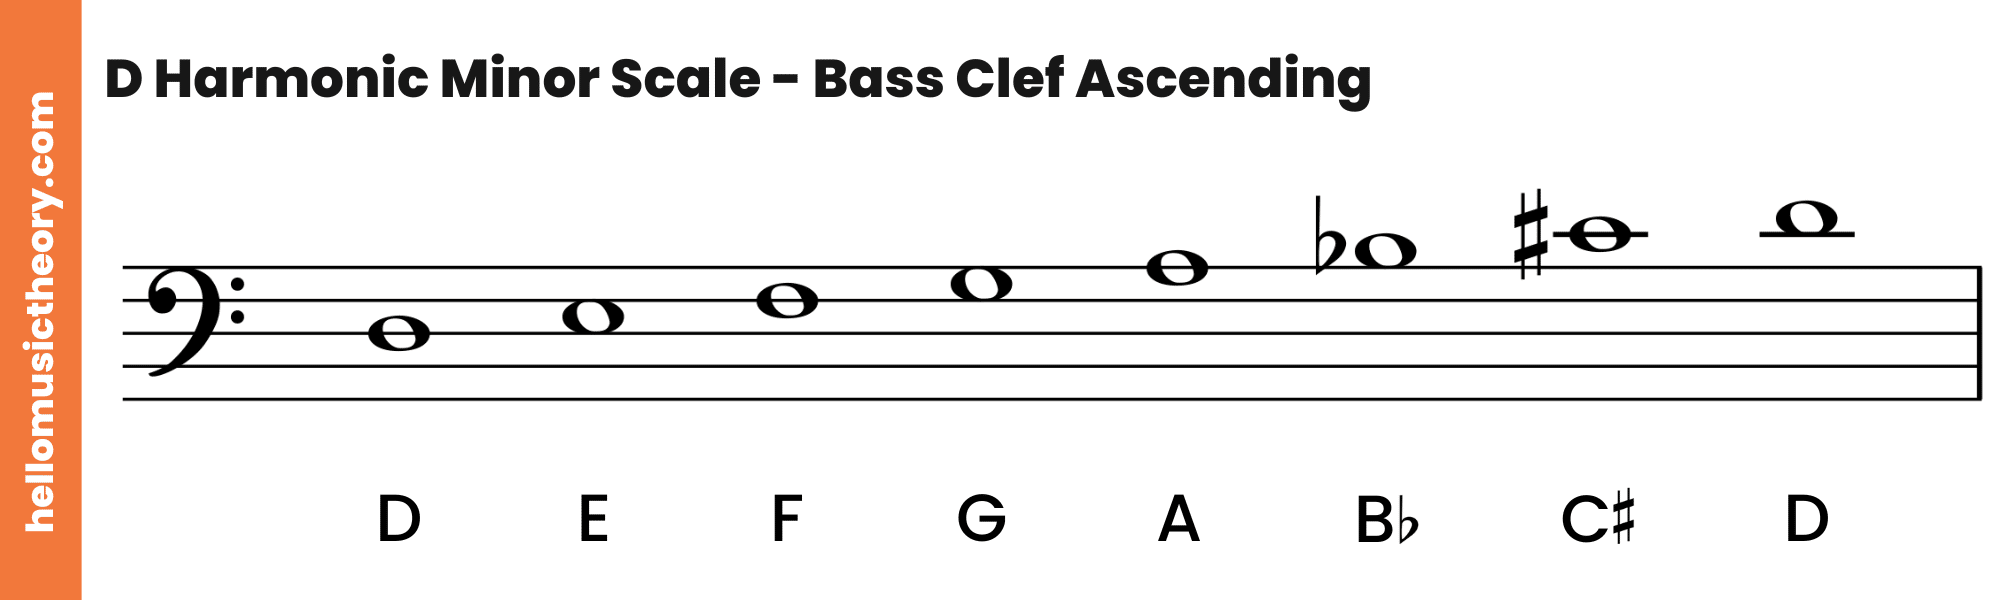 D Harmonic Minor Scale Bass Clef Ascending